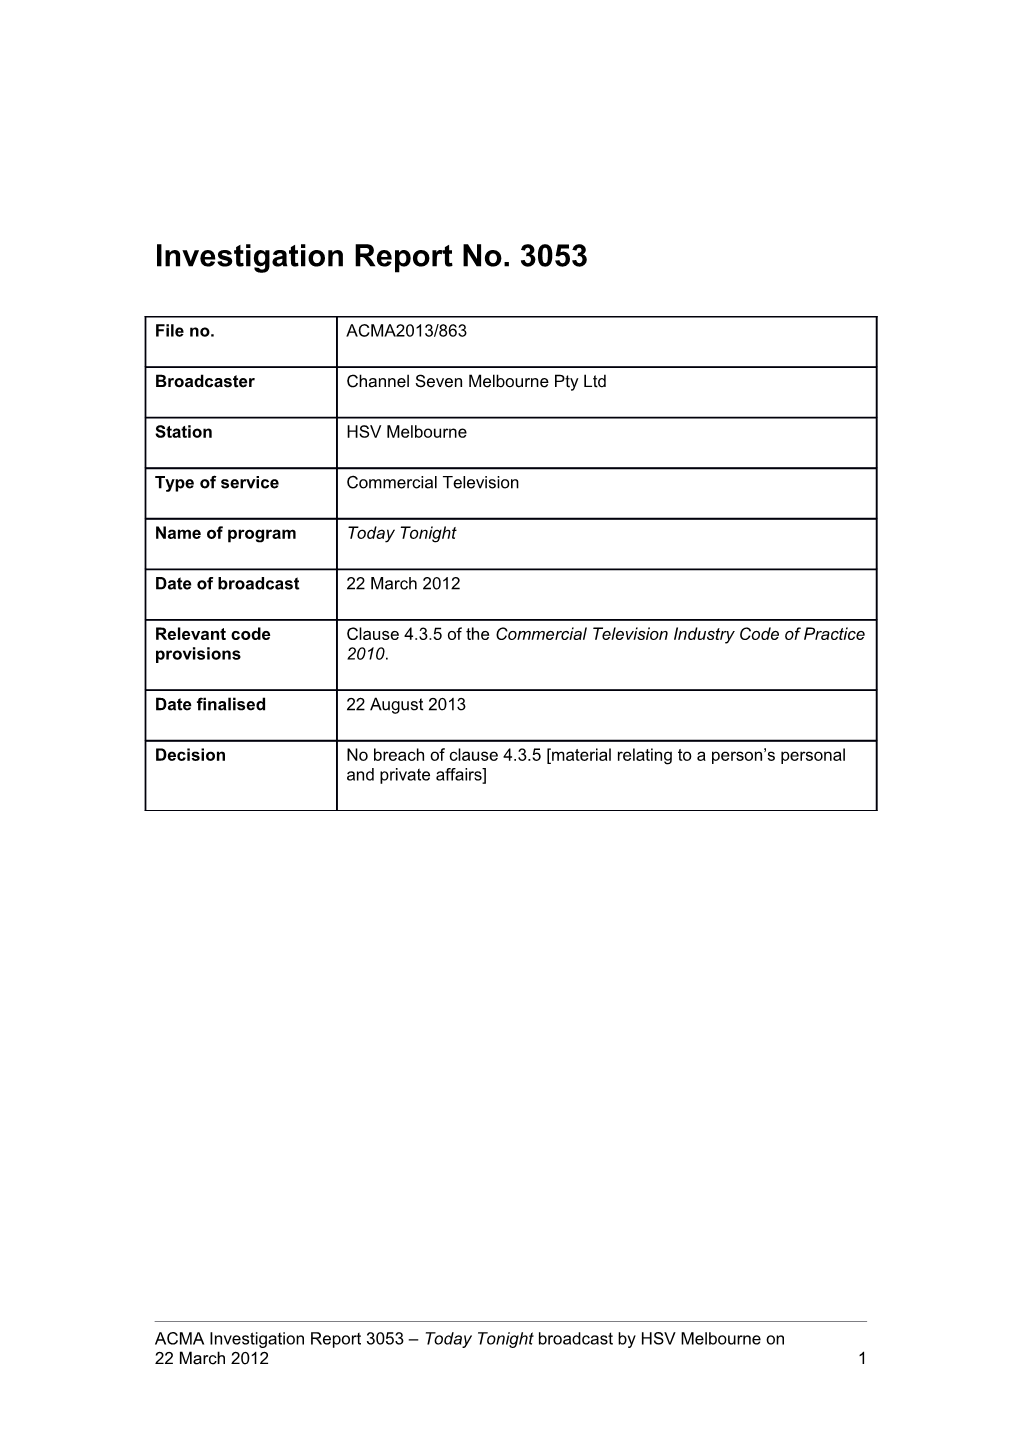 HSV Melbourne Investigation Report 3053